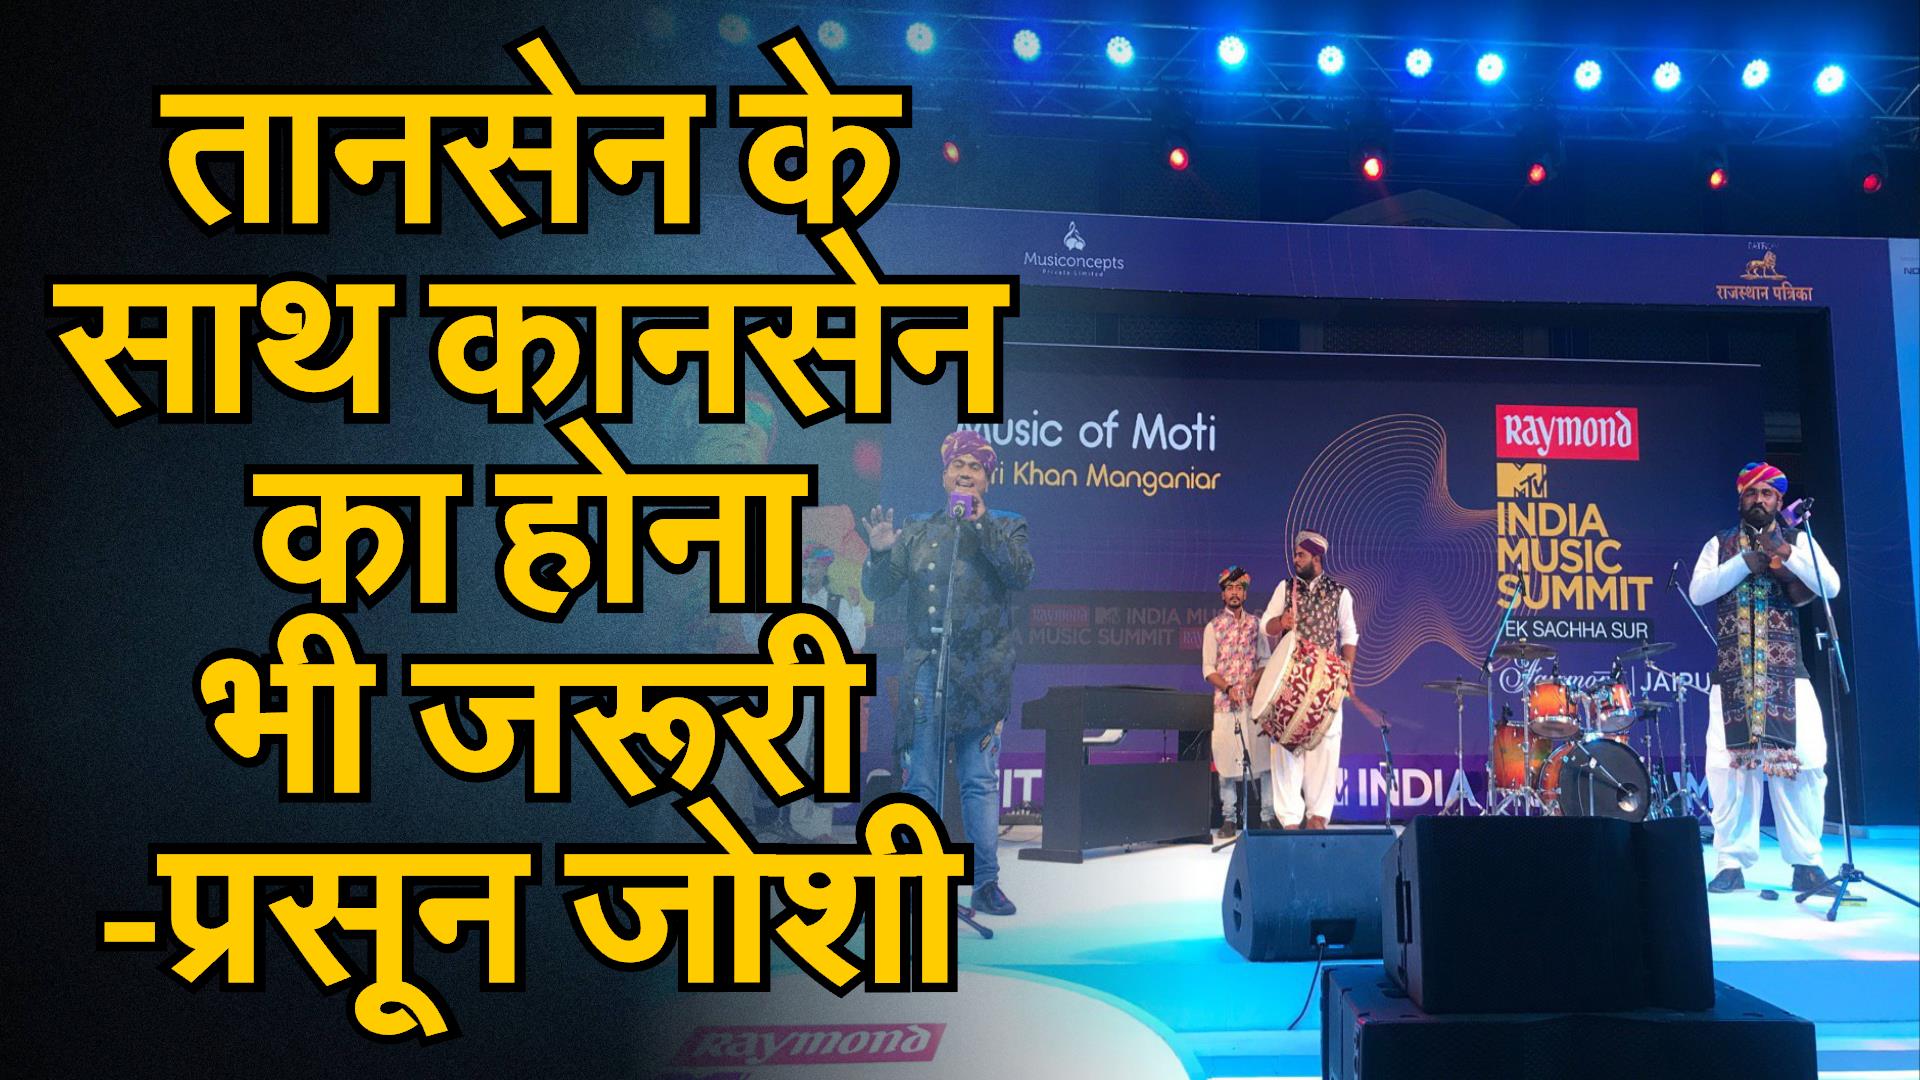 MTV India Music Summit : तानसेन के साथ कानसेन भी जरूरी- Prasoon Joshi